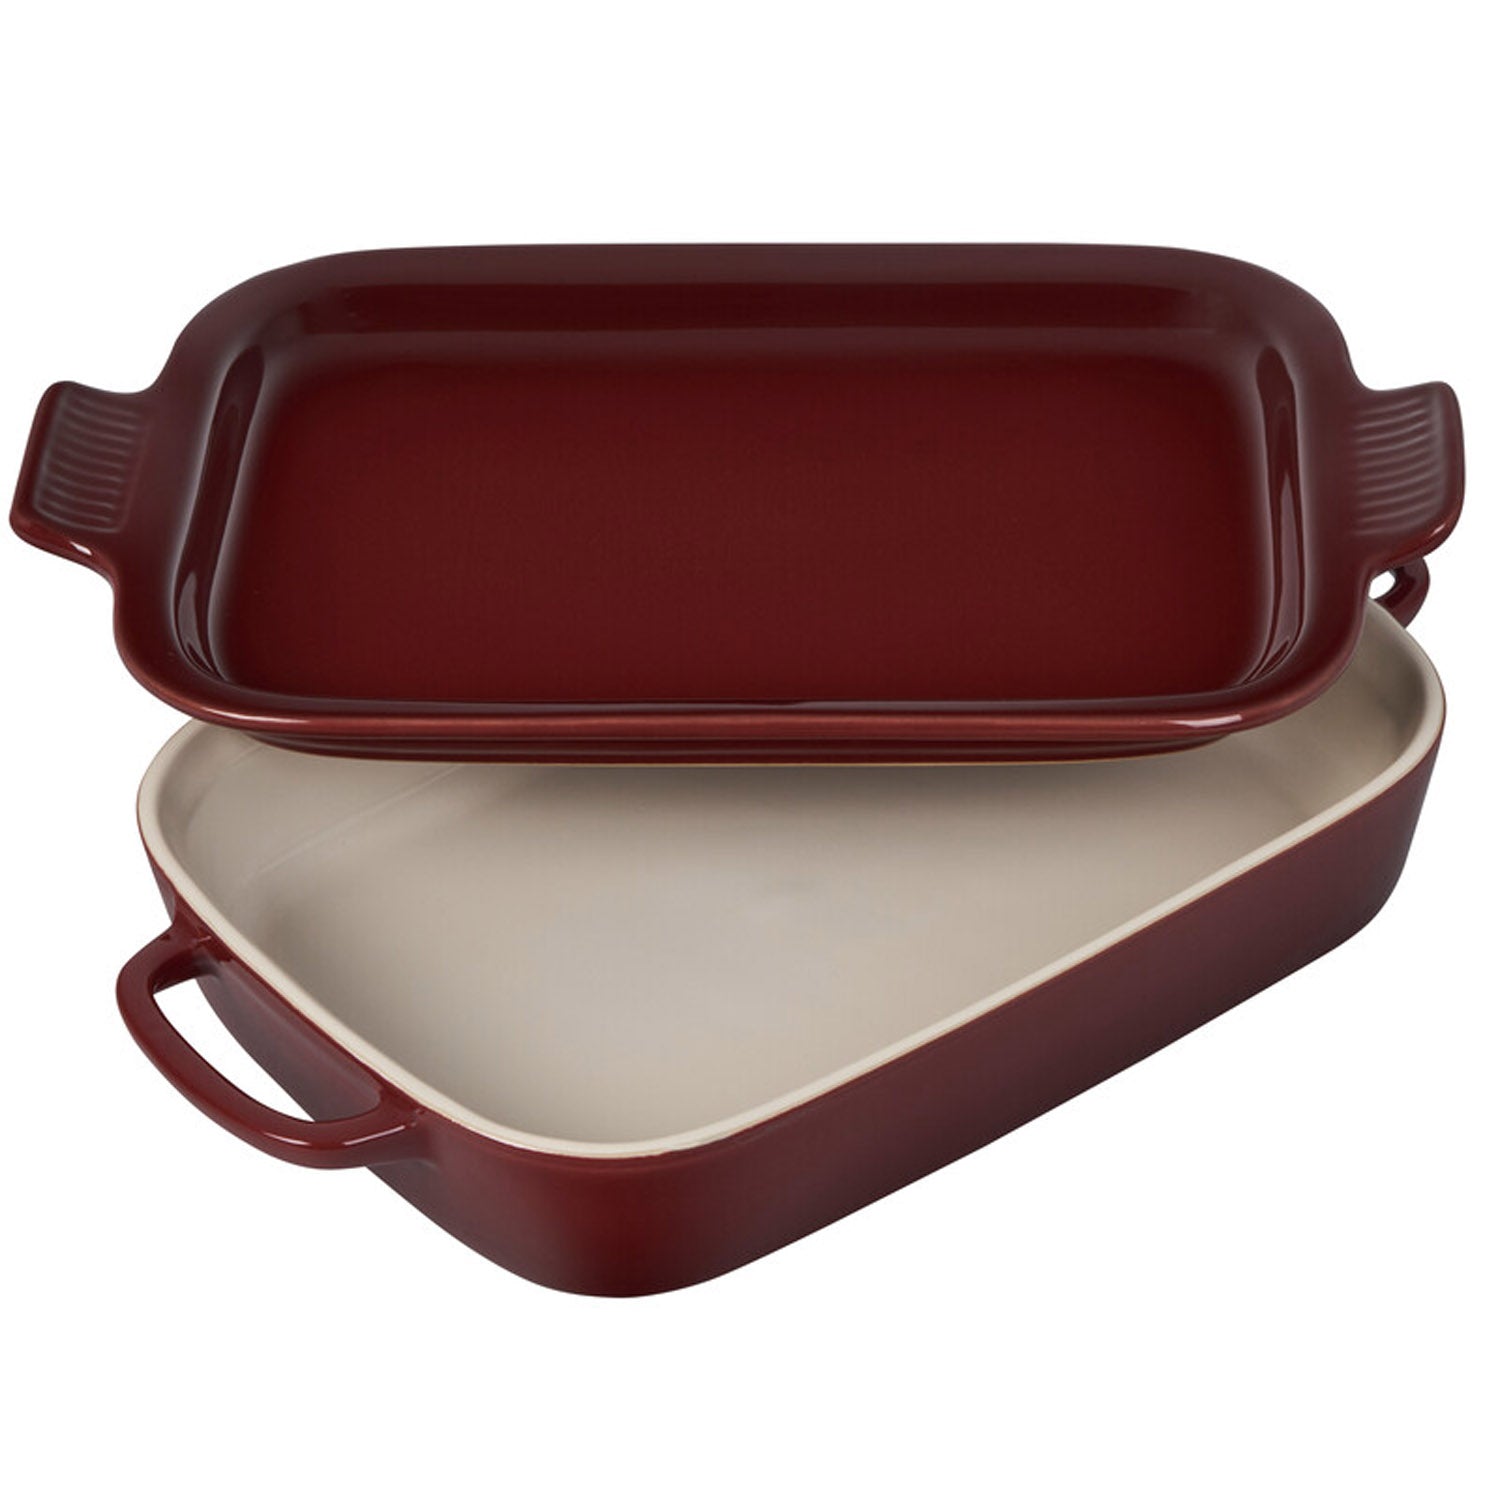 Le Creuset Rectangular White Stoneware Ceramic Baking Dish with Platter Lid  + Reviews